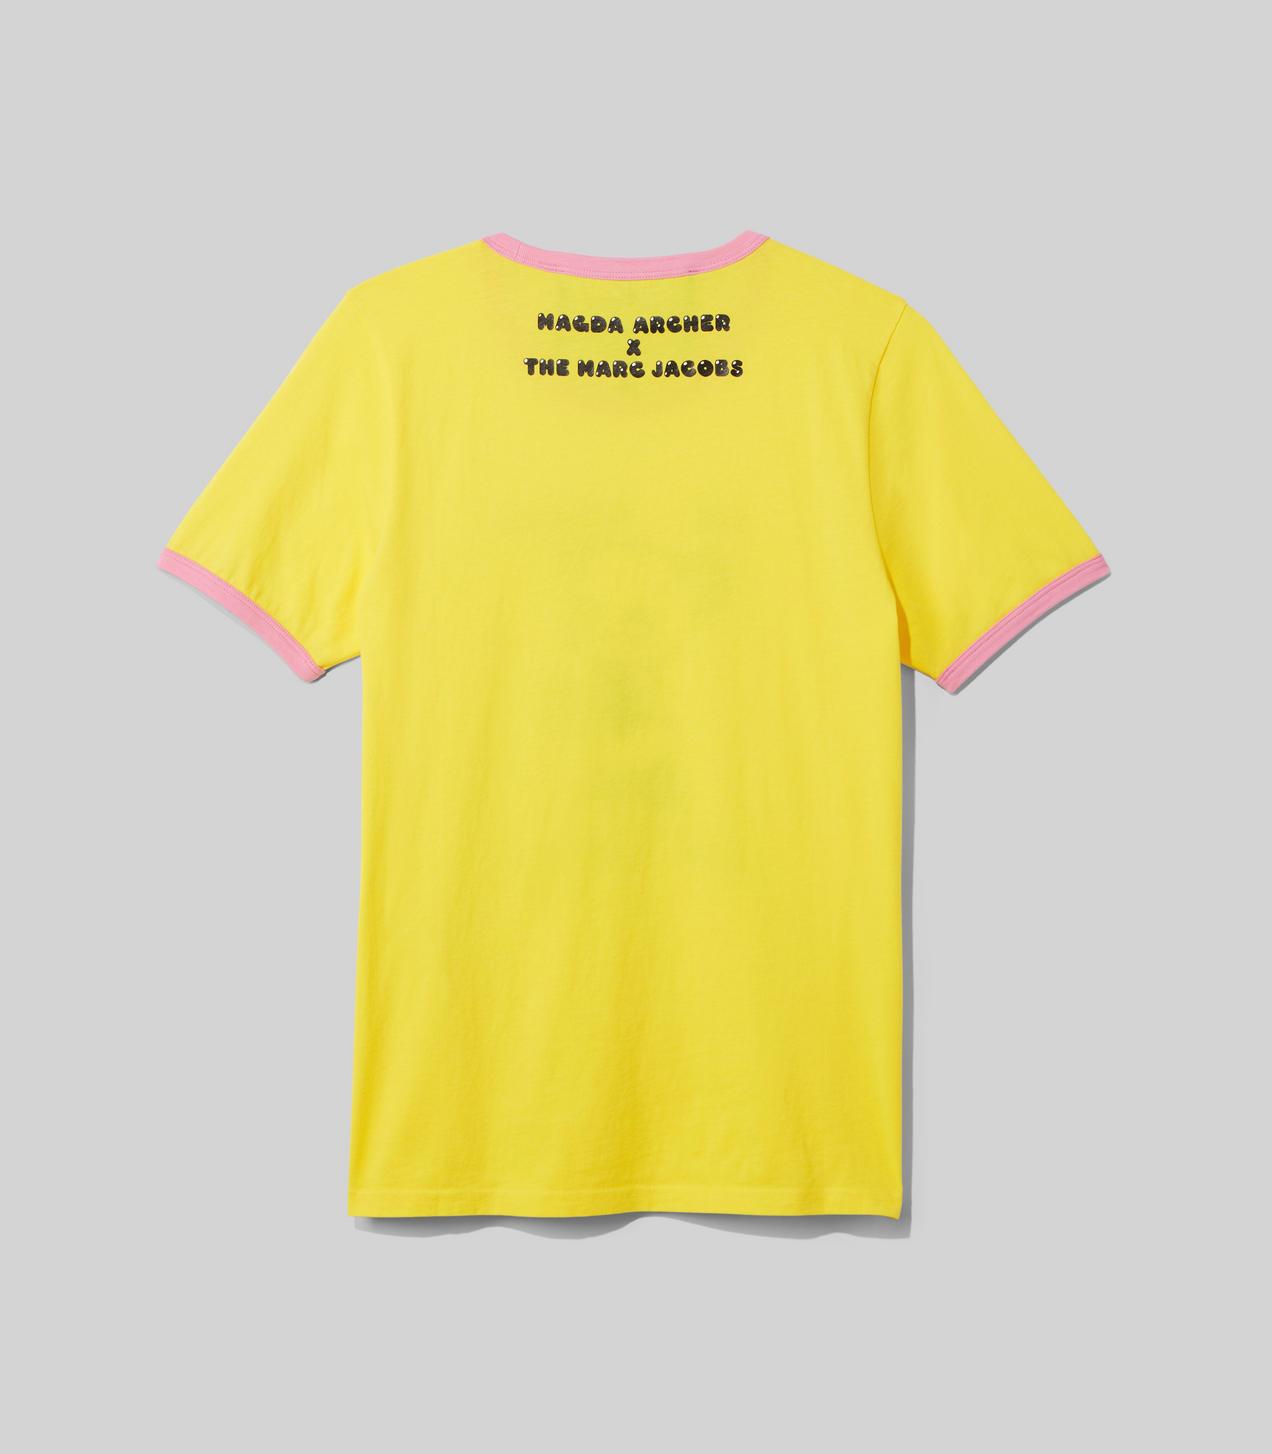 Magda Archer x The Men's Collaboration T-Shirt Marc Jacobs